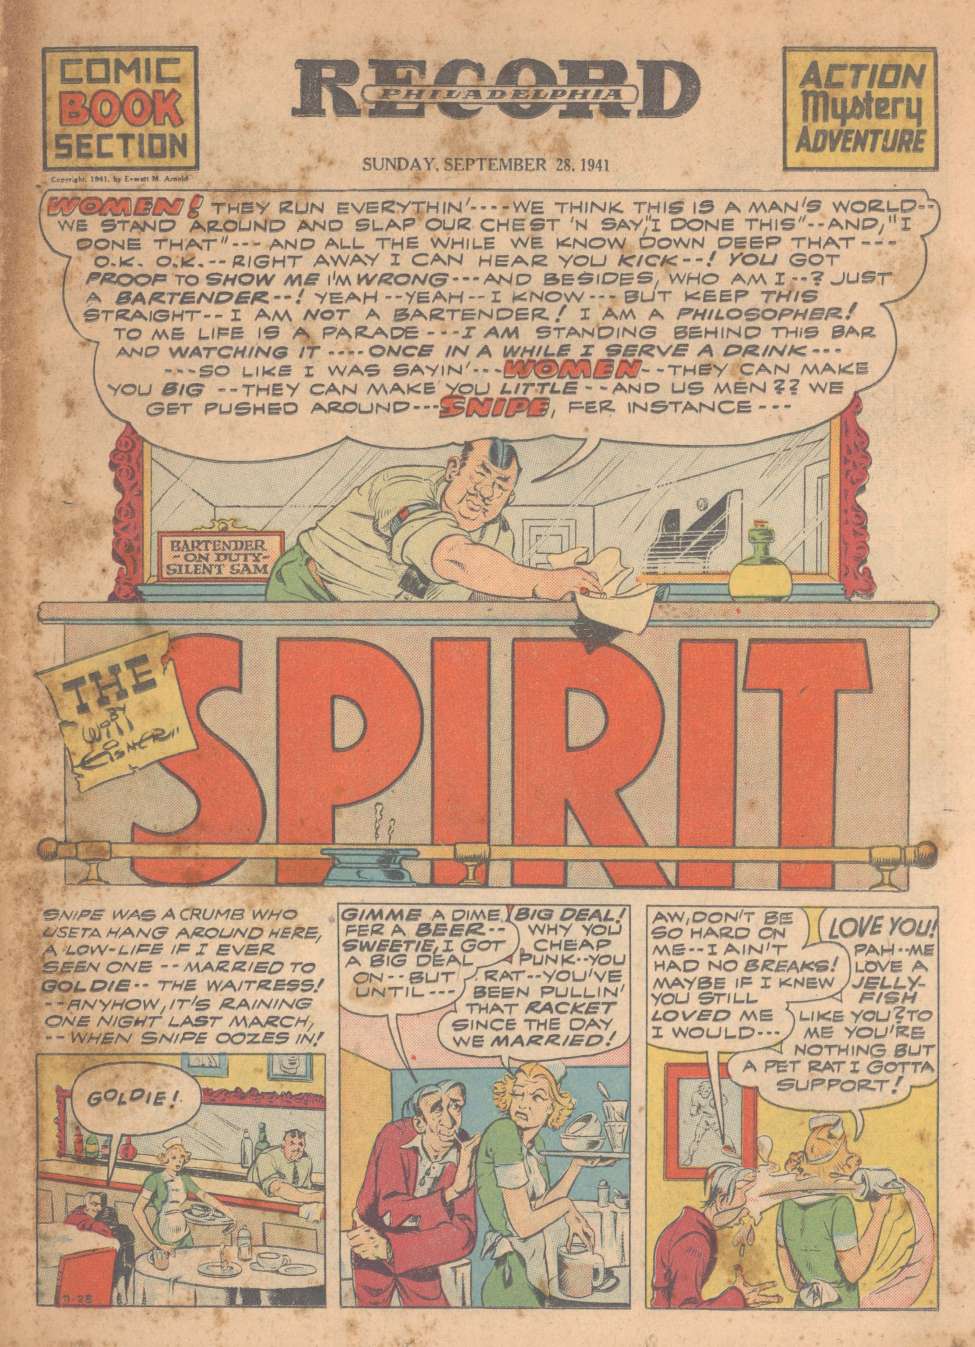 Comic Book Cover For The Spirit (1941-09-28) - Philadelphia Record - Version 2